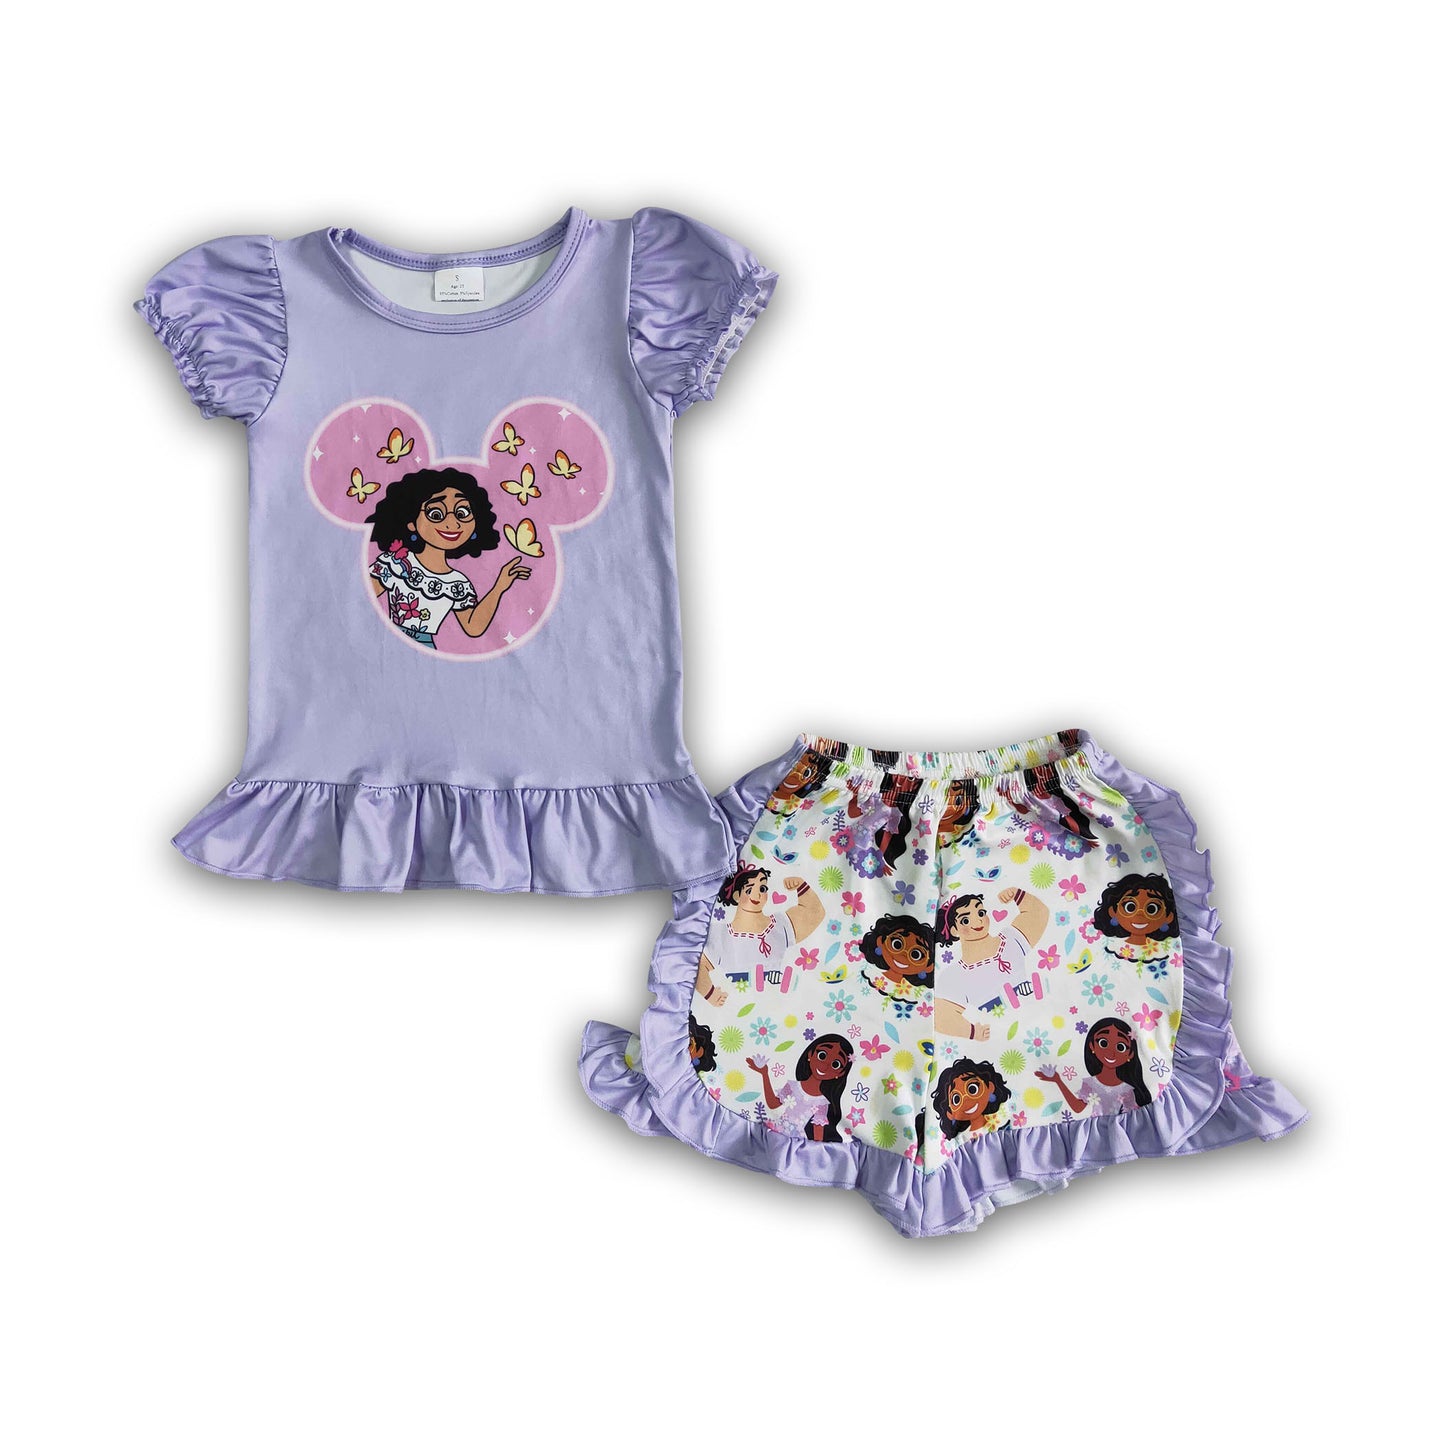 Lavender cute print magic shirt ruffle shorts baby girls summer clothing